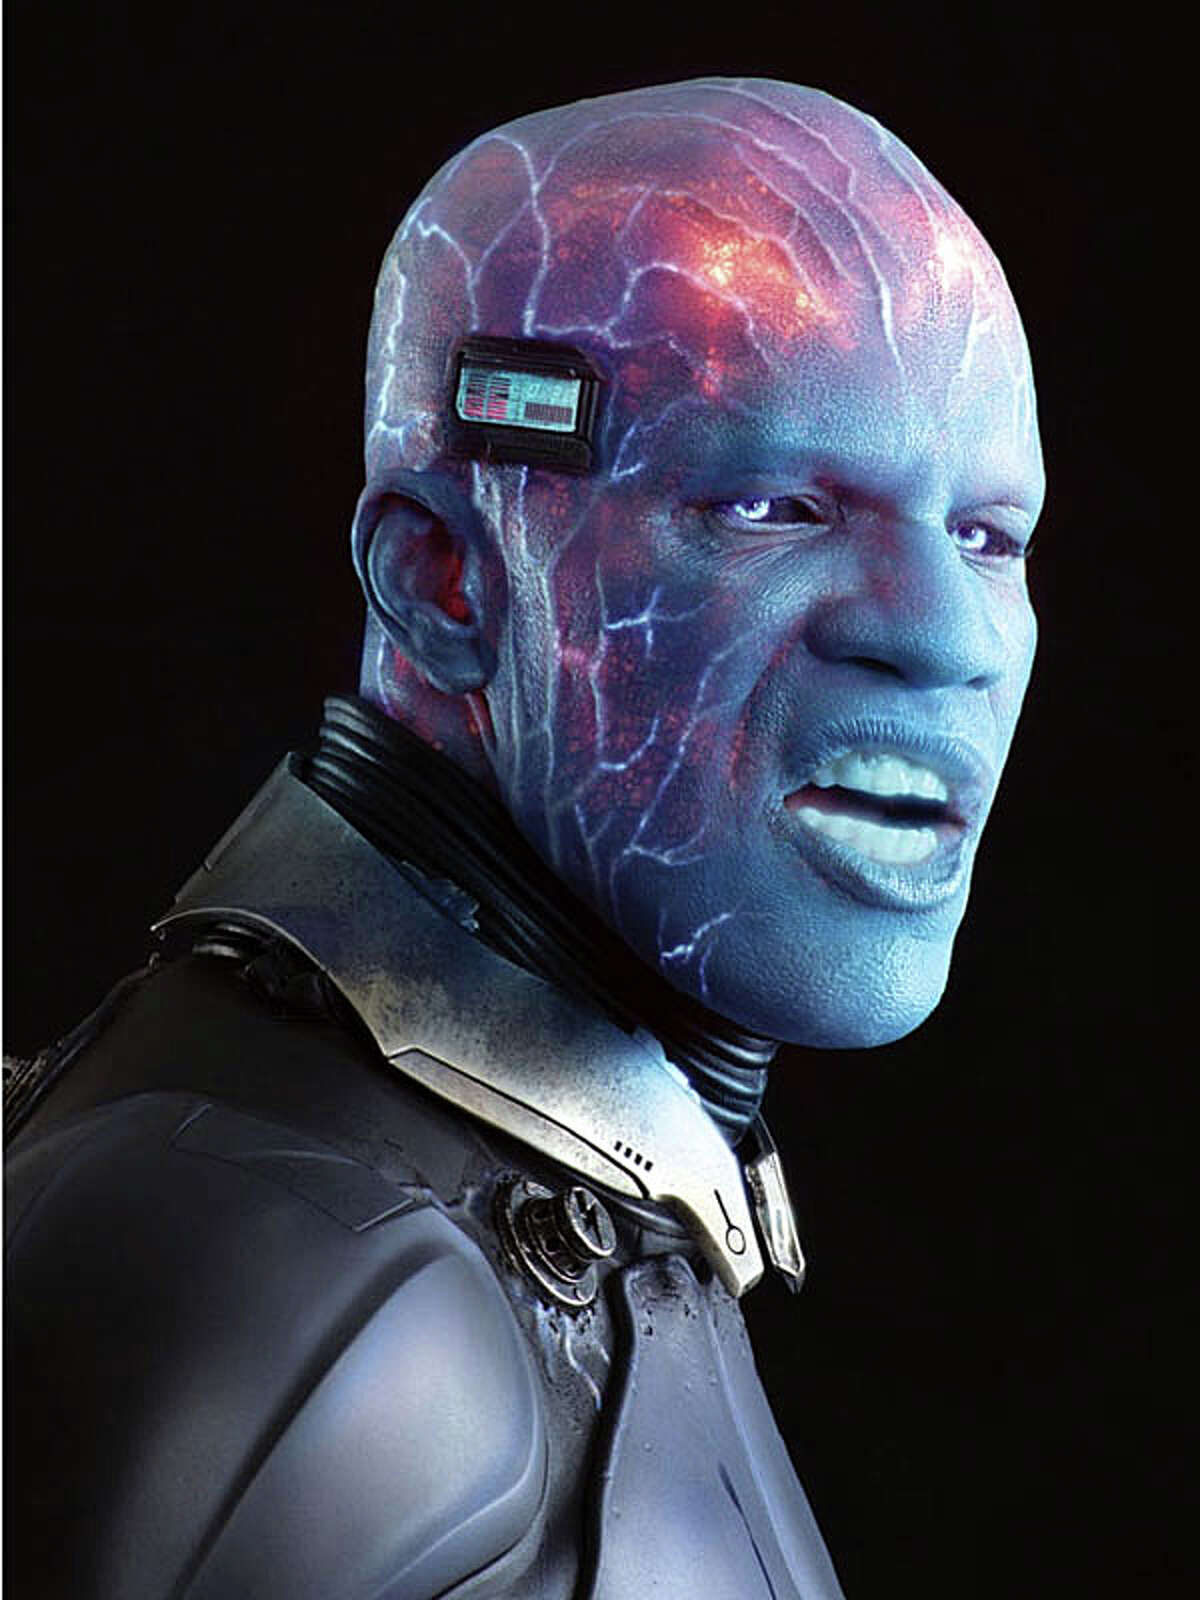 Jamie Foxx portrays the villanous Electro in the new movie, "The Amazing Spider-Man 2.'